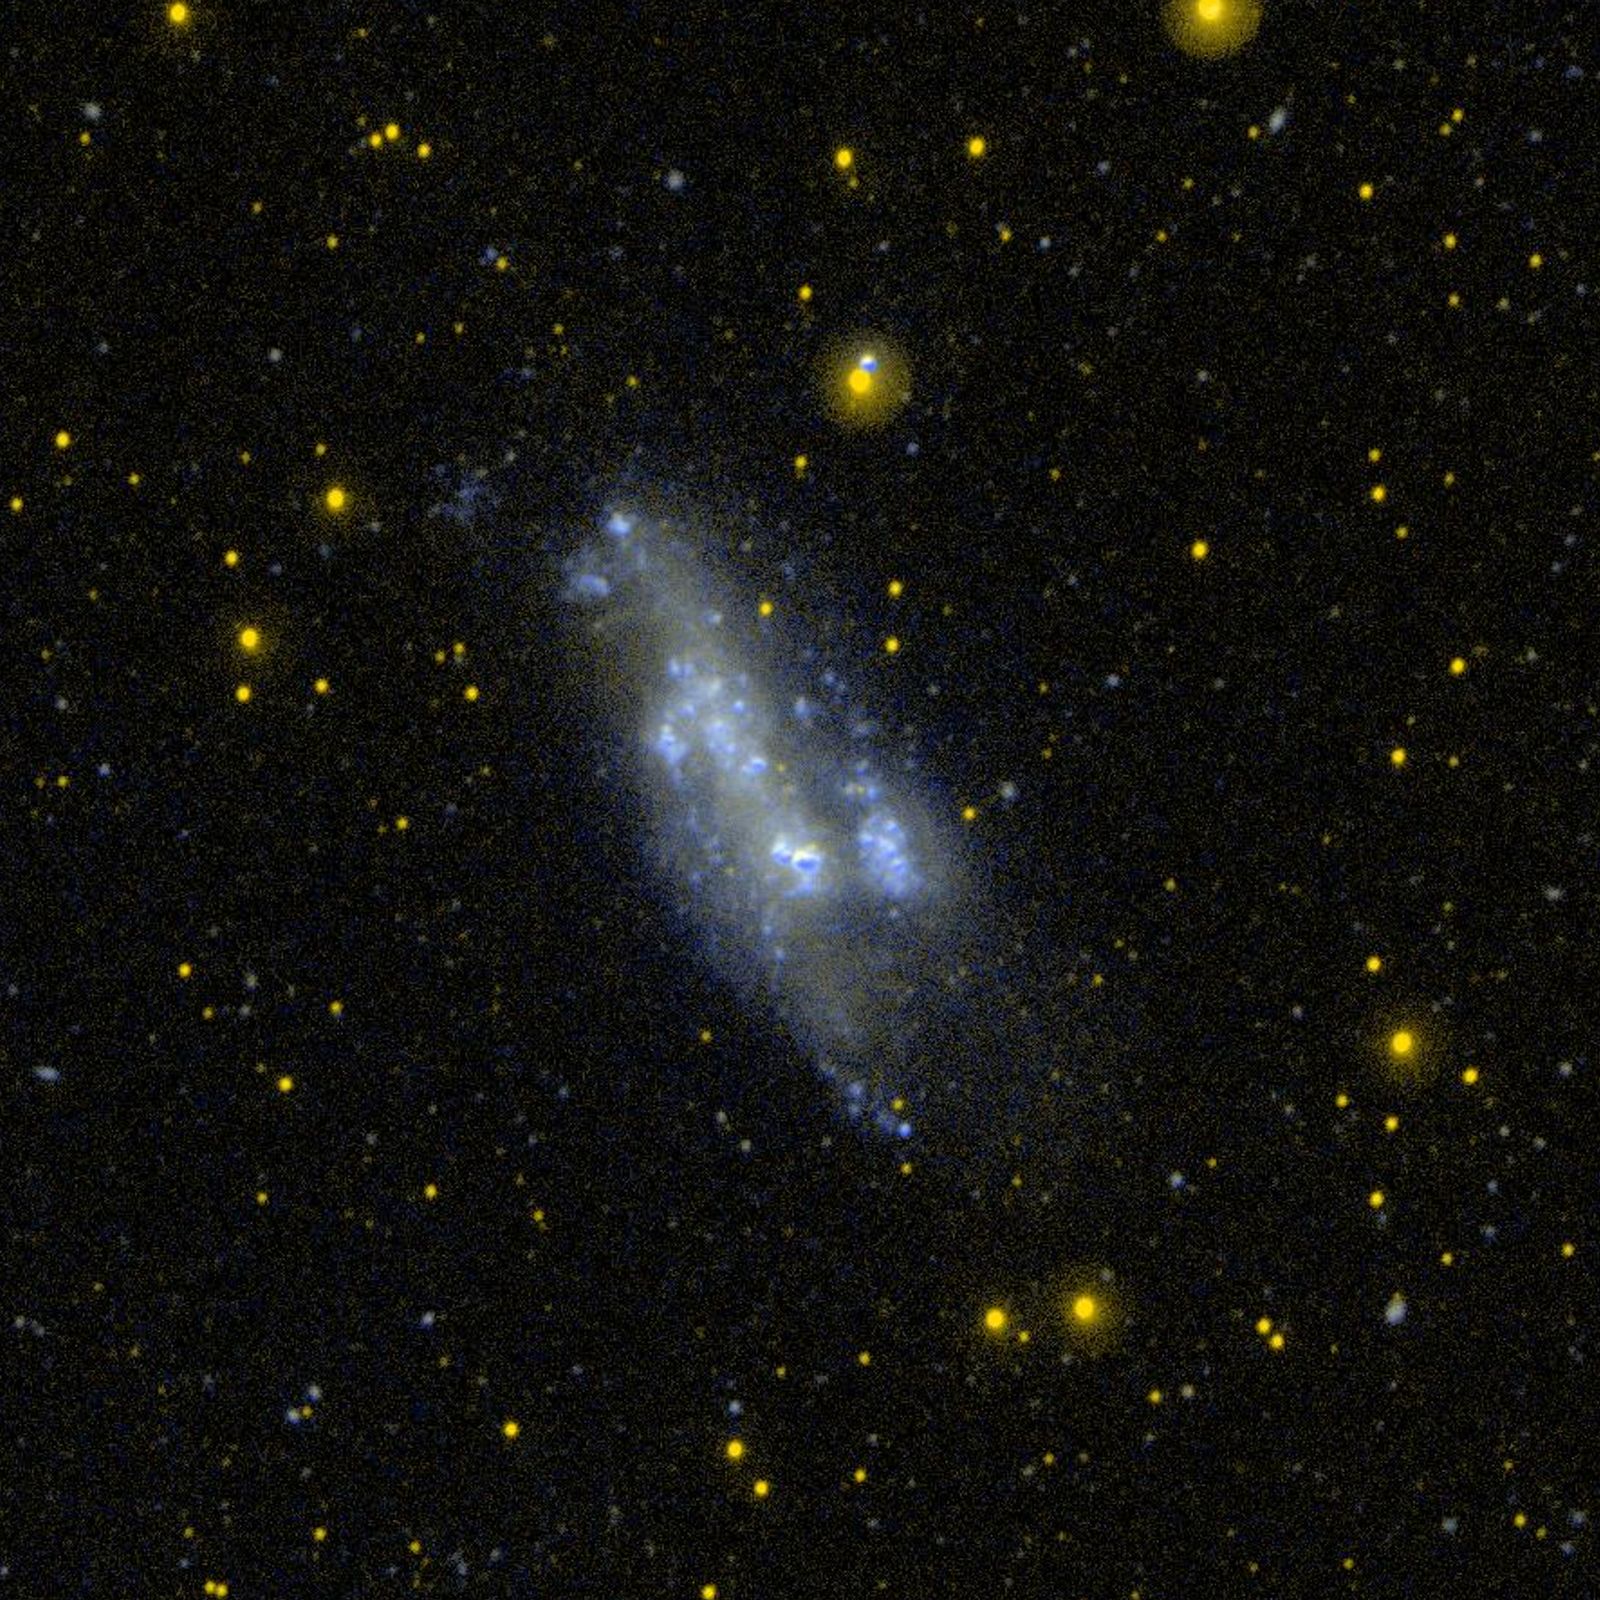 NGC_2366_2363httpupload.wikimedia.org.jpg